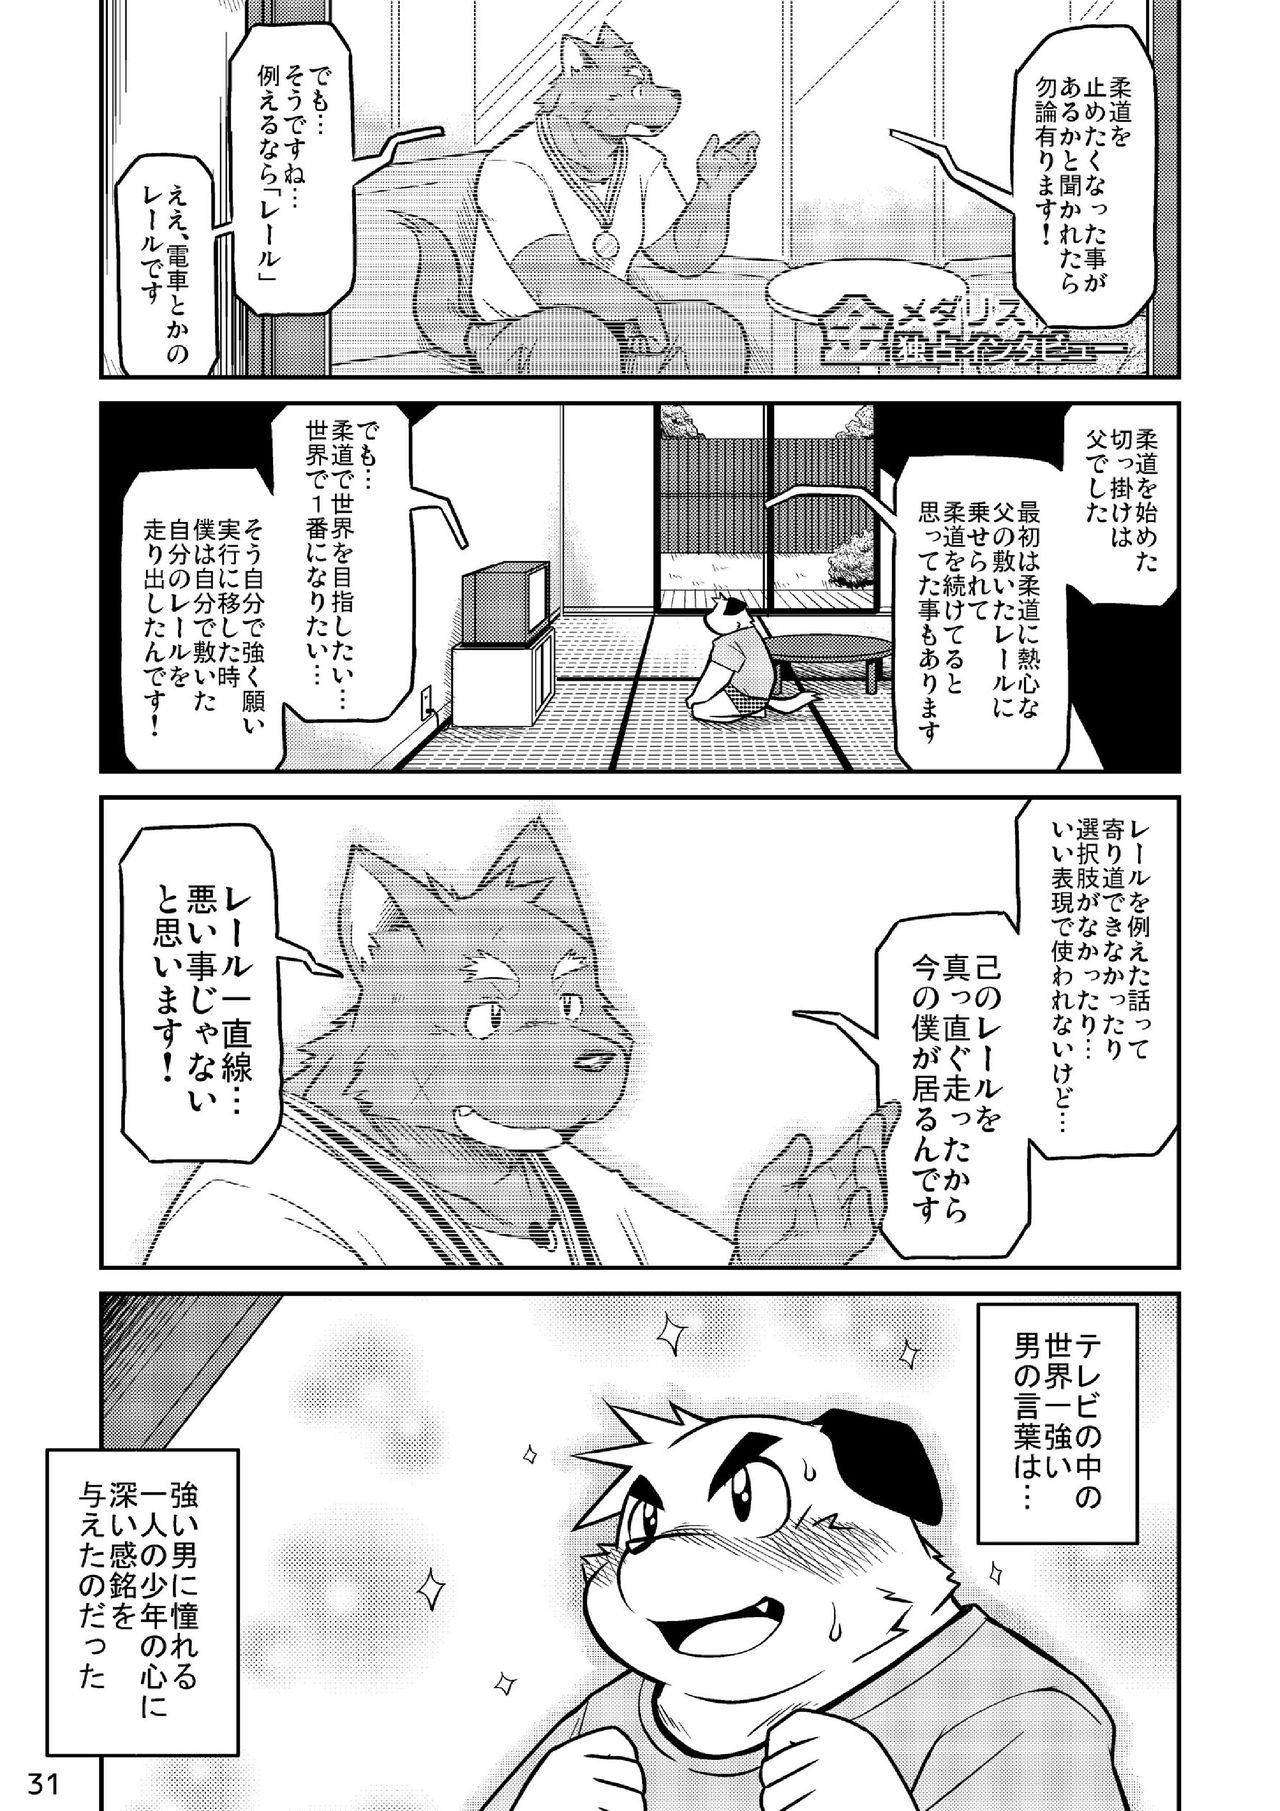 Takaki Takashi - Short Comic 